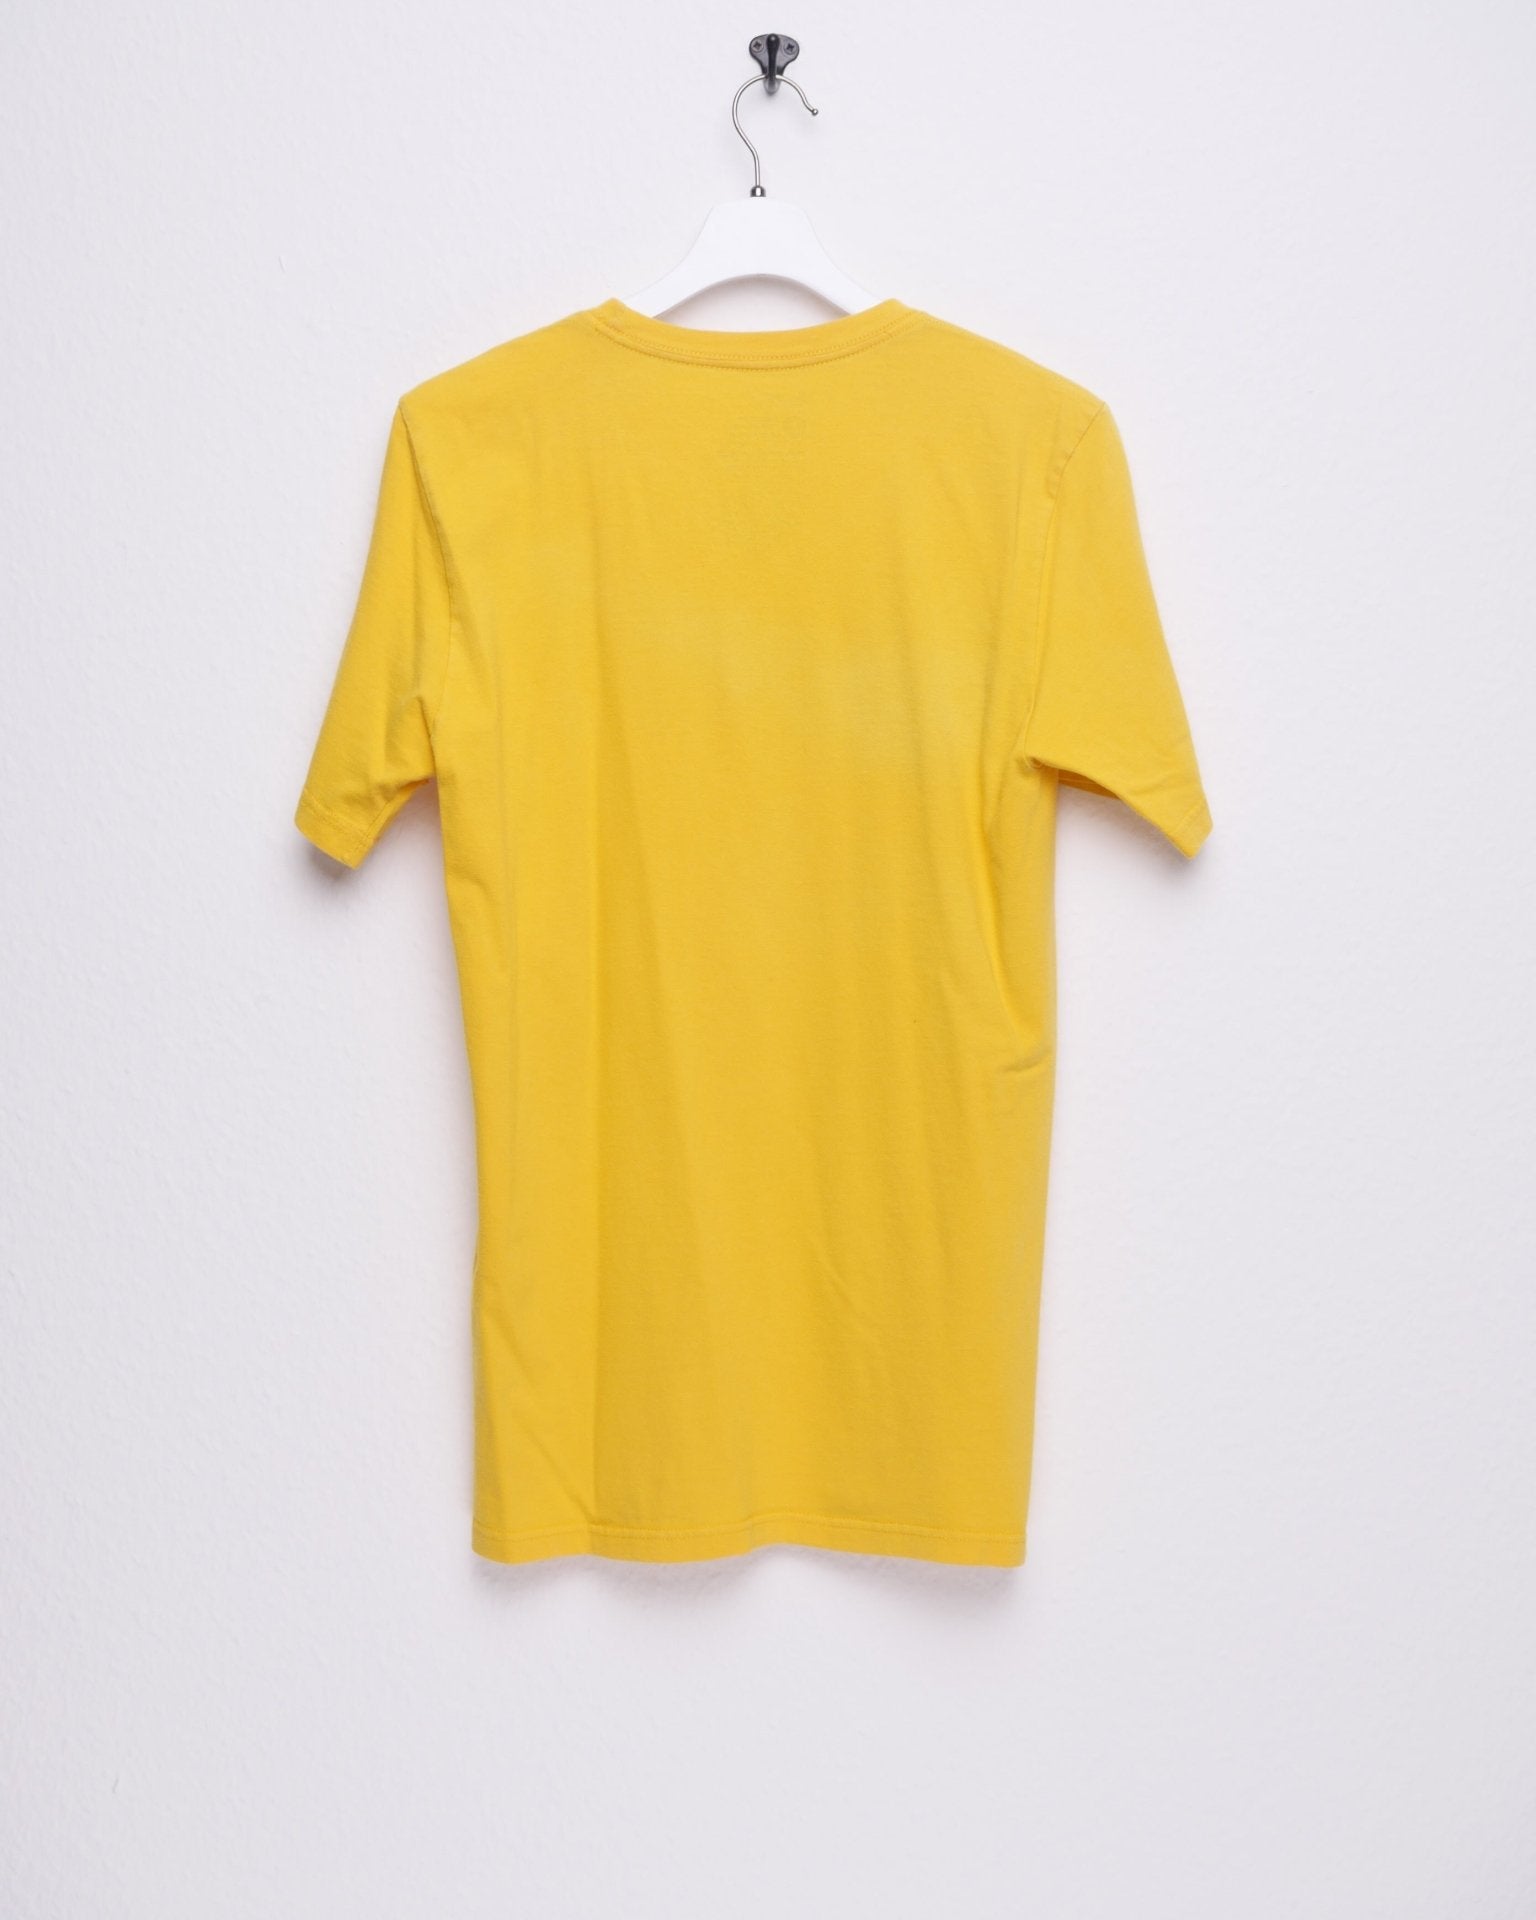 Nike Bring the Heat printed Logo yellow Shirt - Peeces